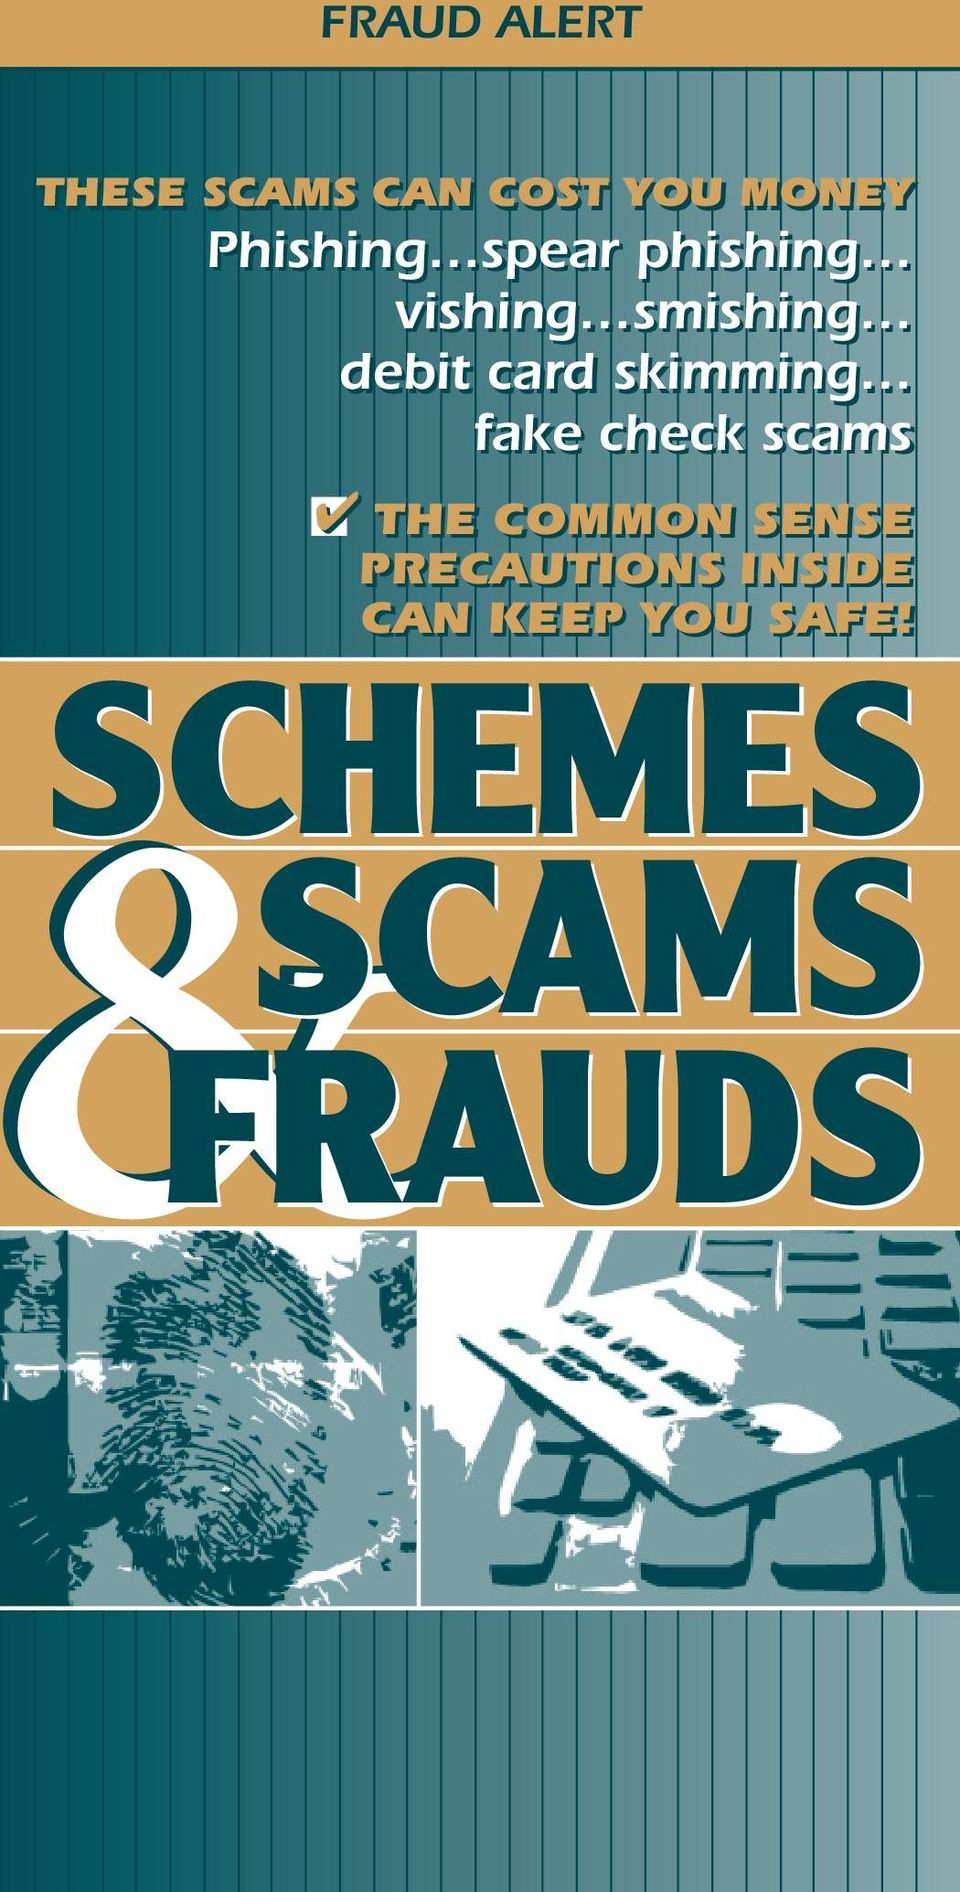 card skimming fake check scams THE COMMON SENSE